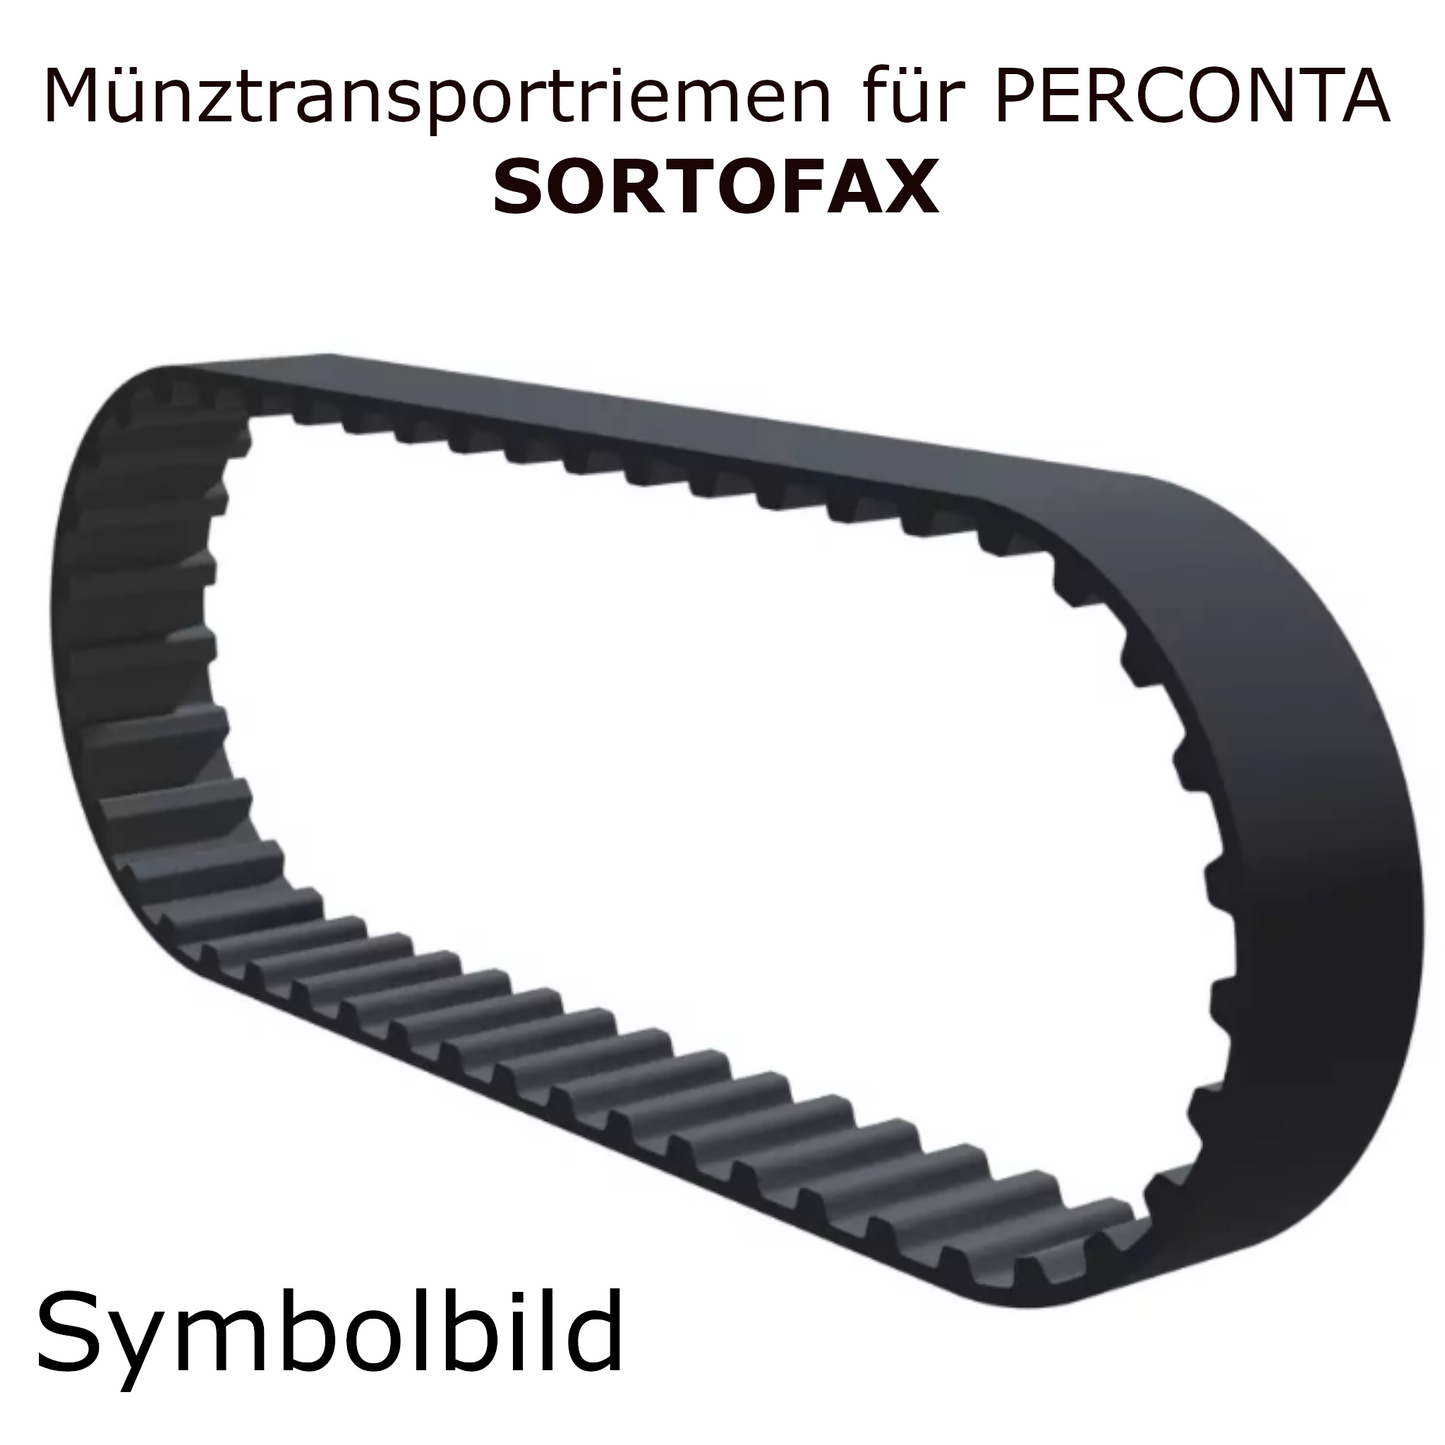 Münztransportriemen PERCONTA Sortofax 460 XL 025